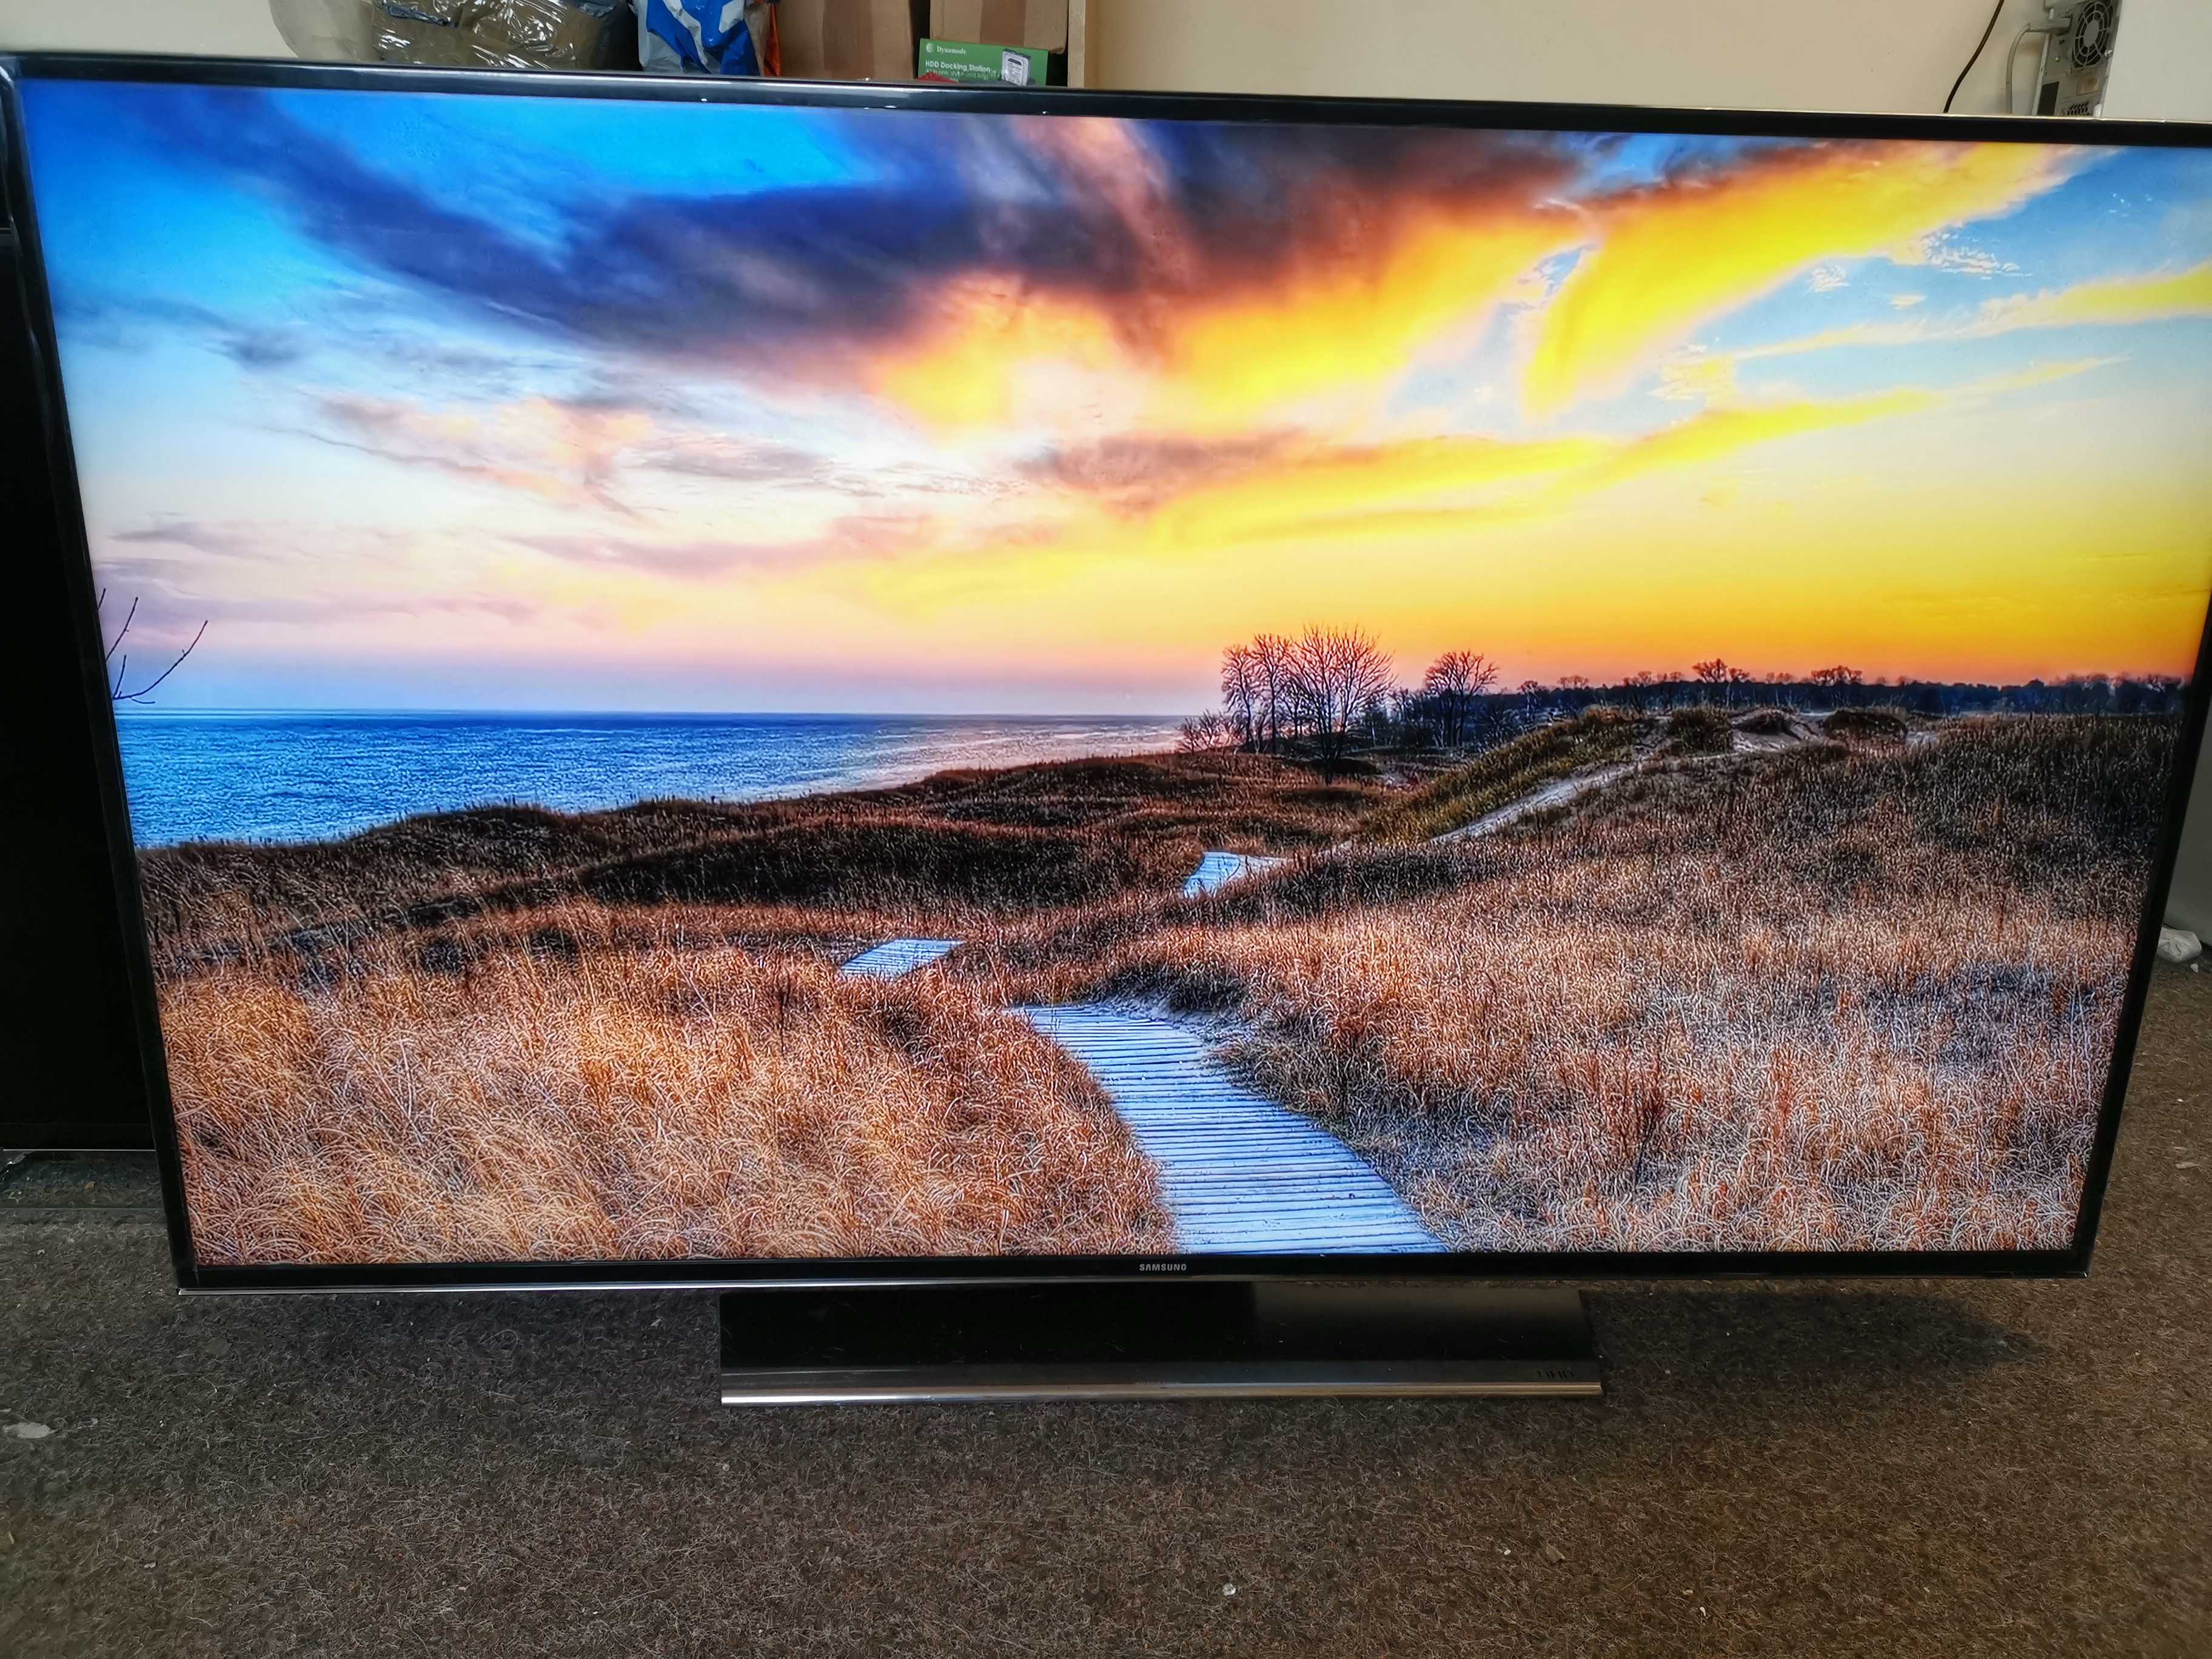 Samsung ue55tu7170u 4k телевизор бюджетного сегмента